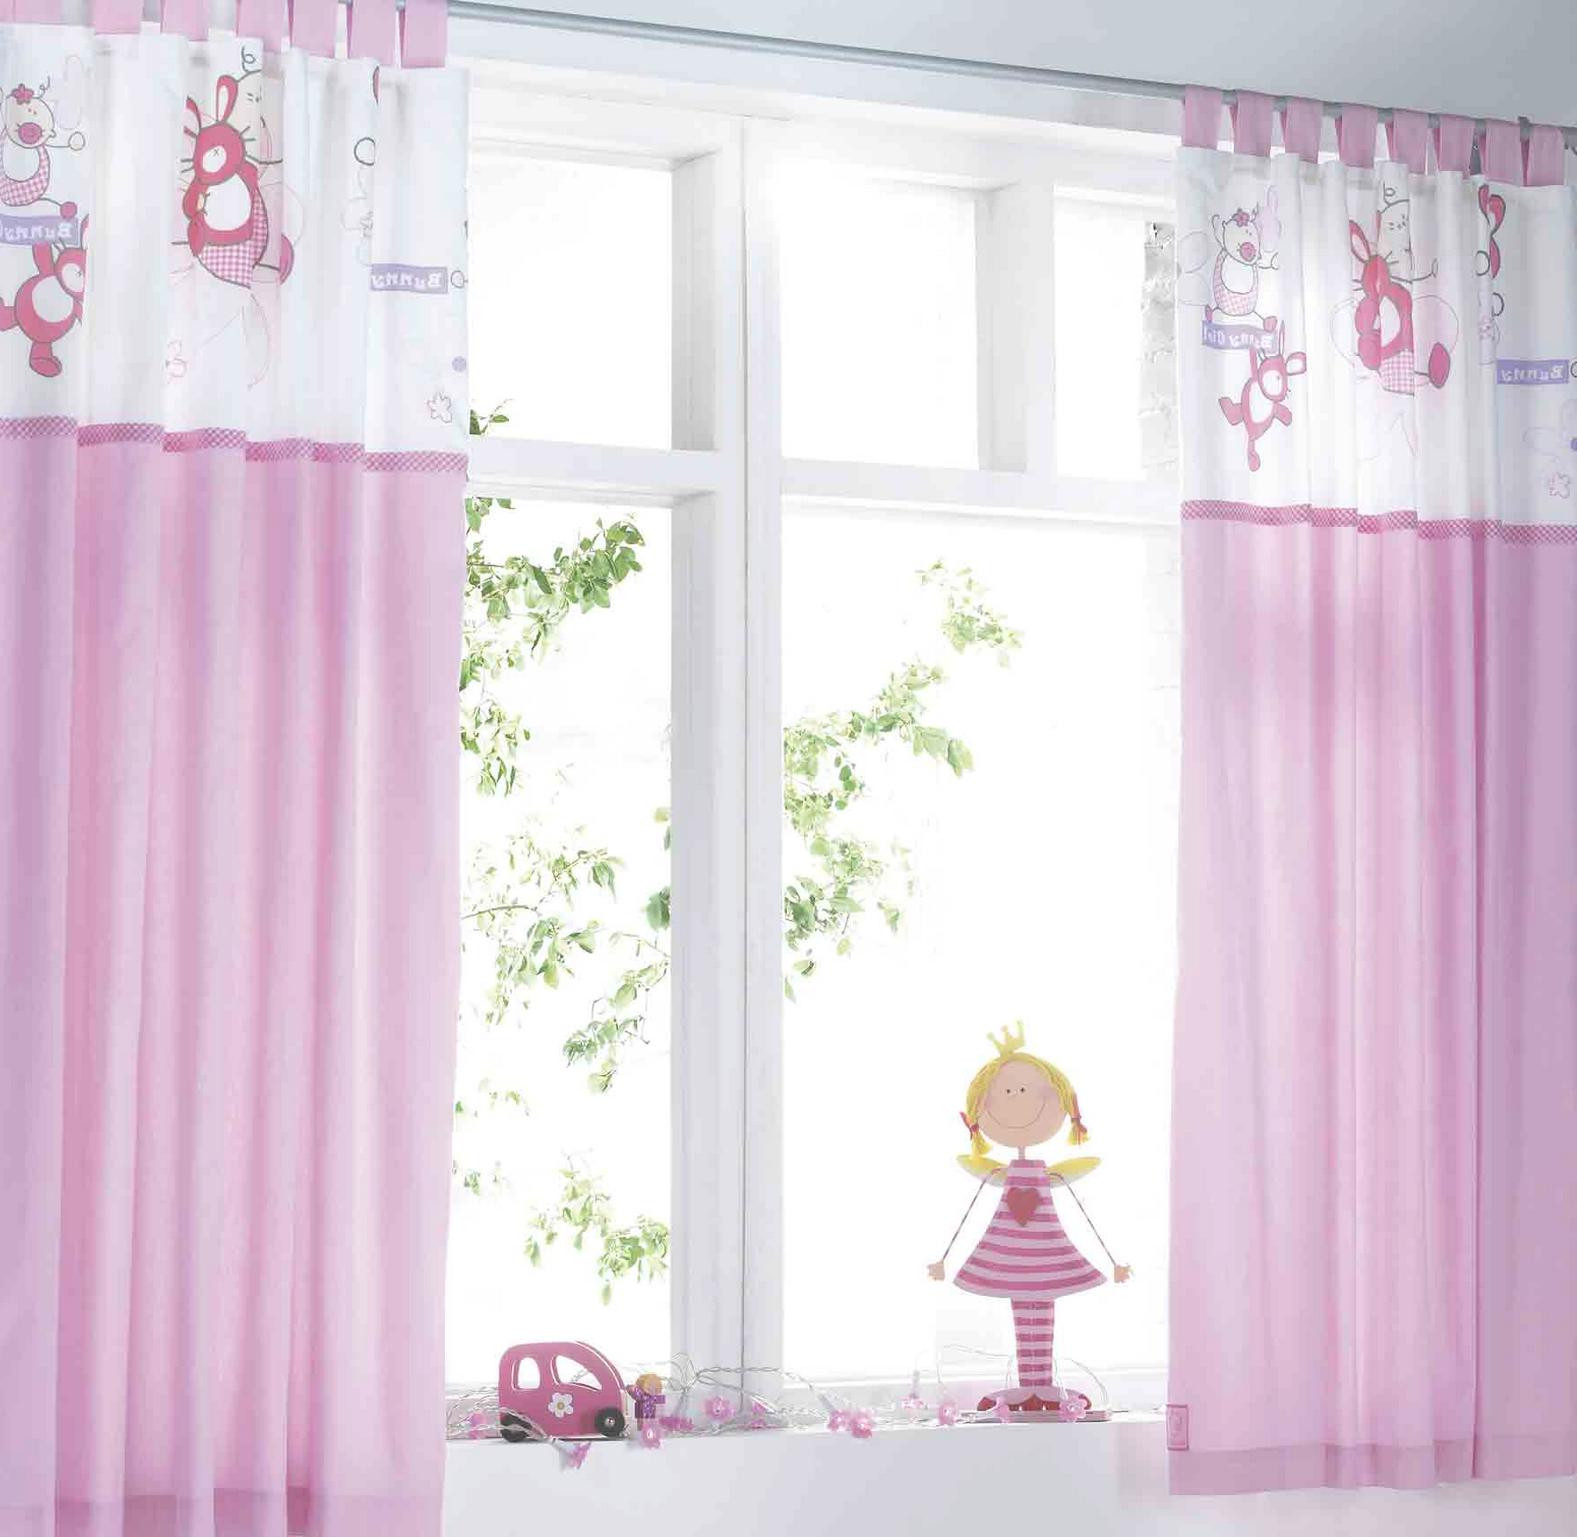 Kids Bedroom Curtains
 Cute Window Treatment Kids Bedroom Curtains